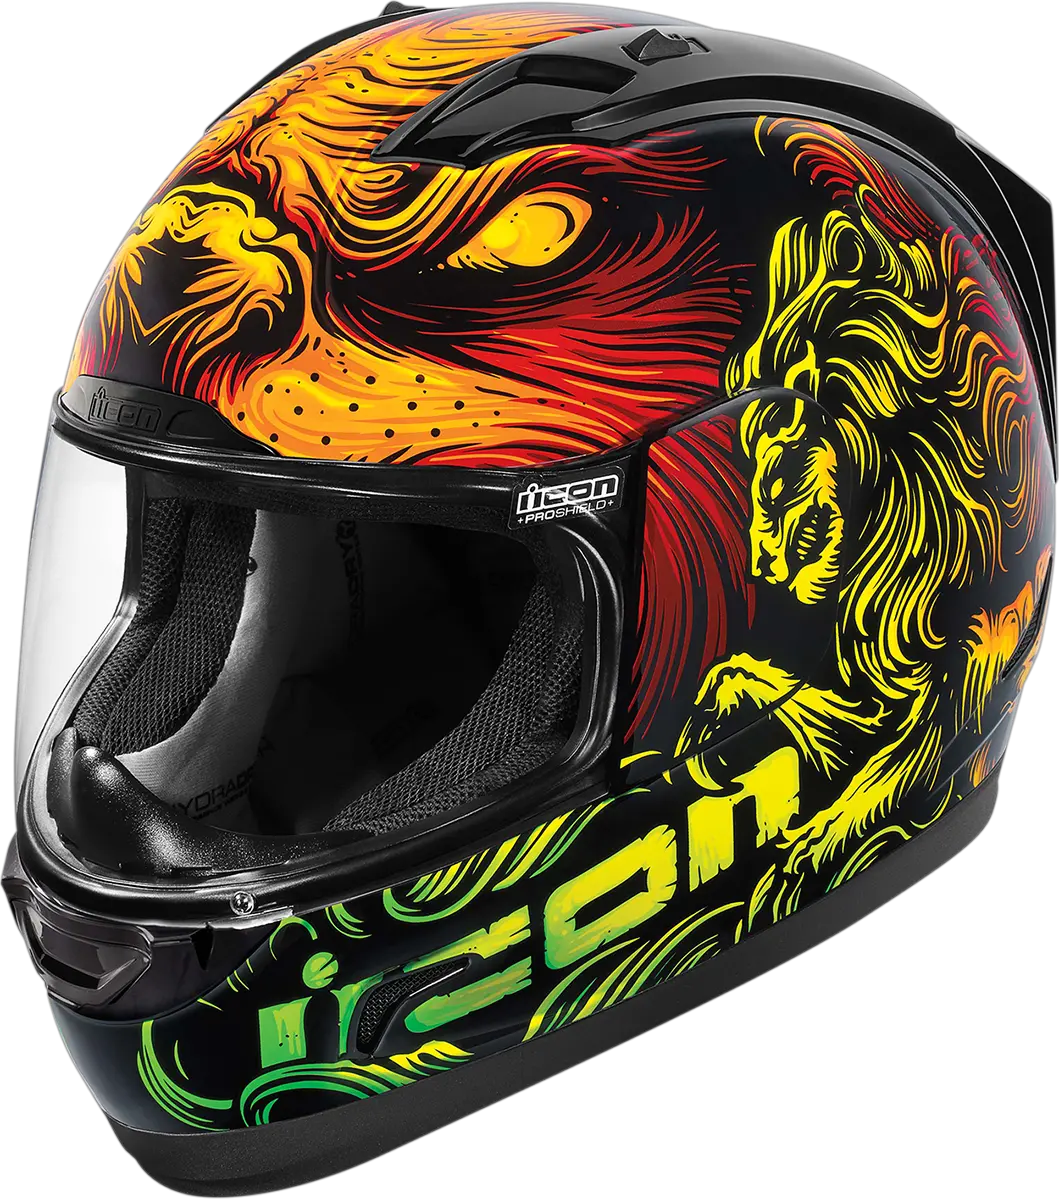 Motorcycle Helmets Png Free Download 4 Icon Alliance Majesty Helmet Helmet Png